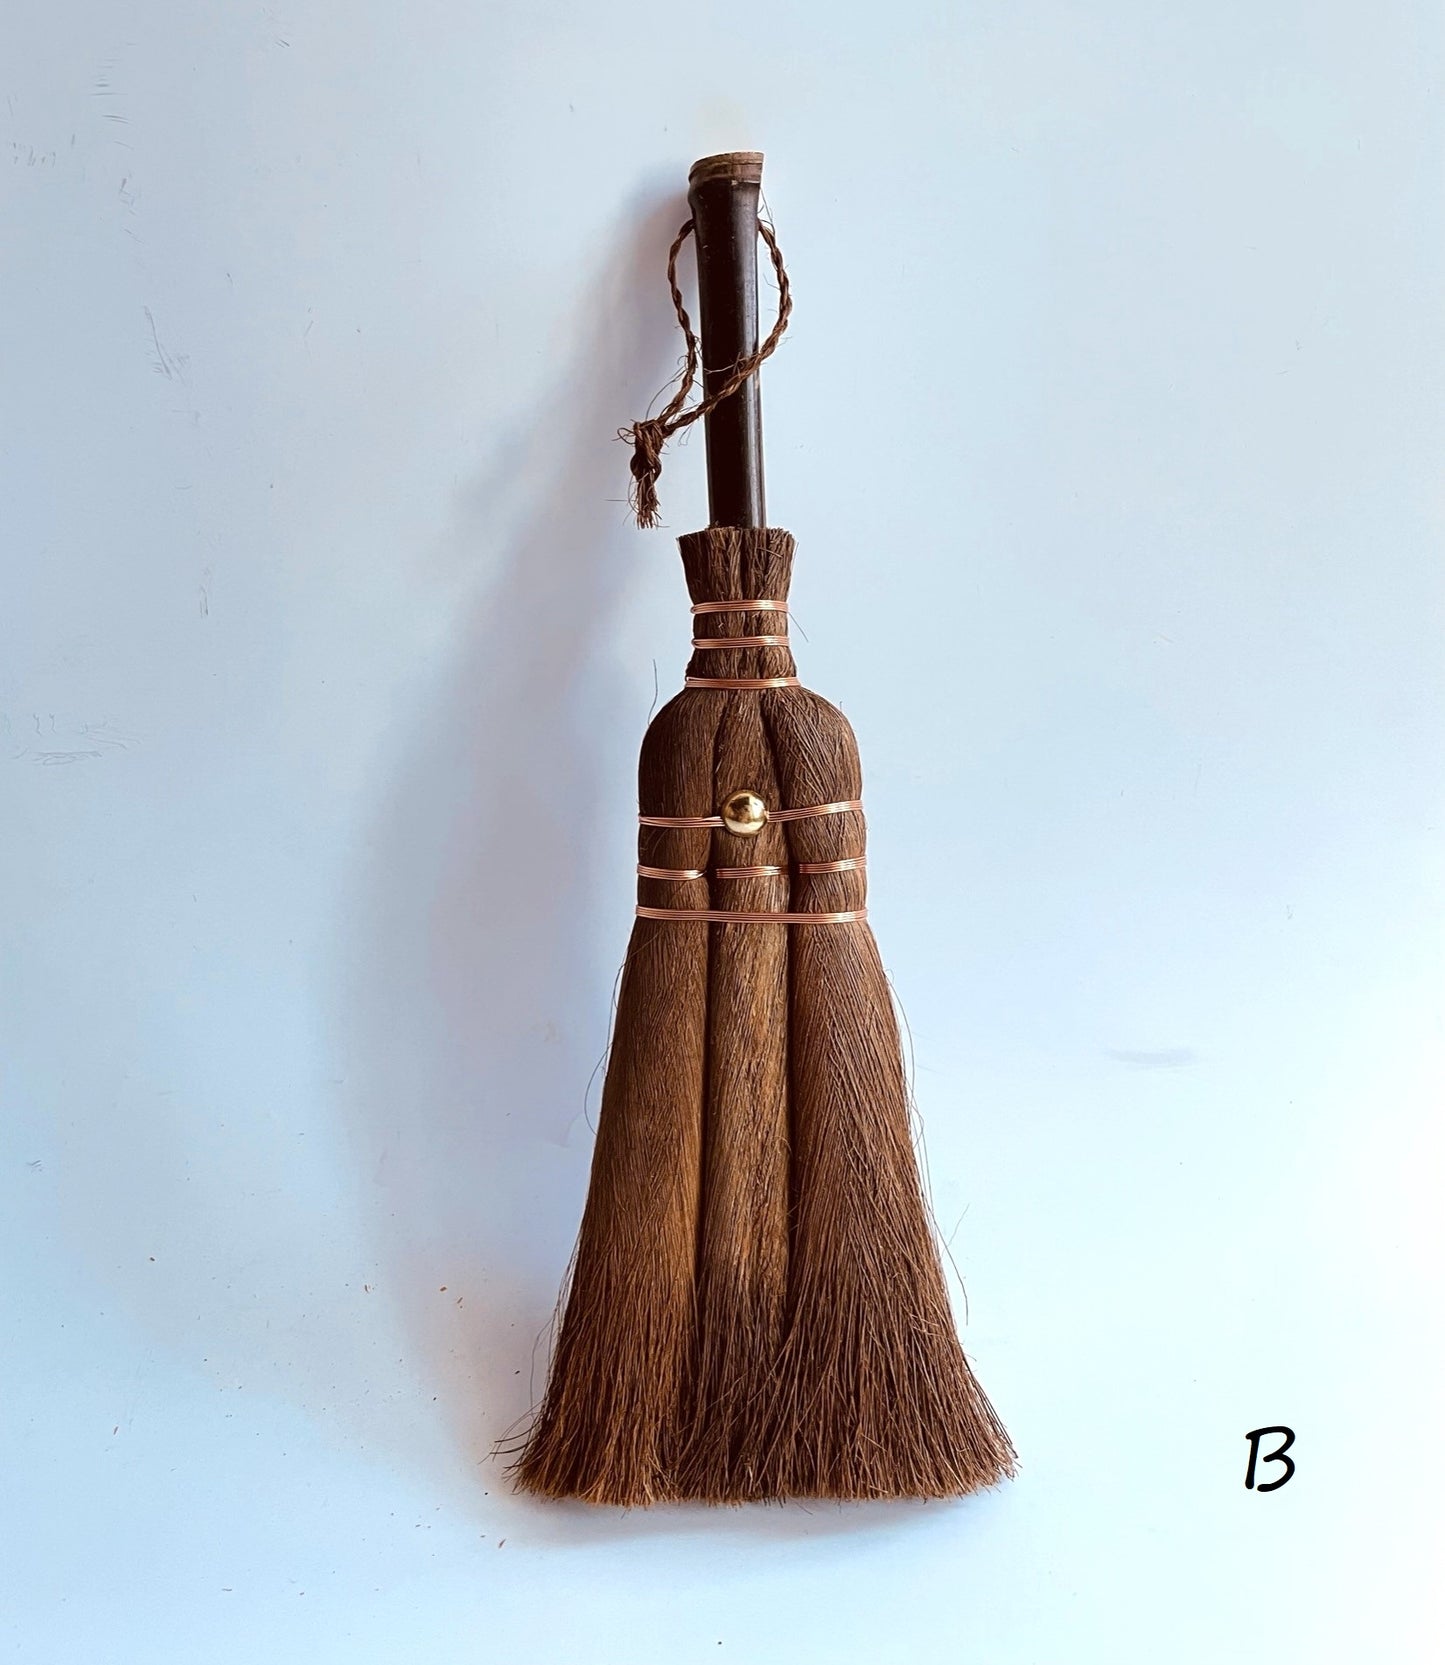 Handmade whisk broom and dustpan